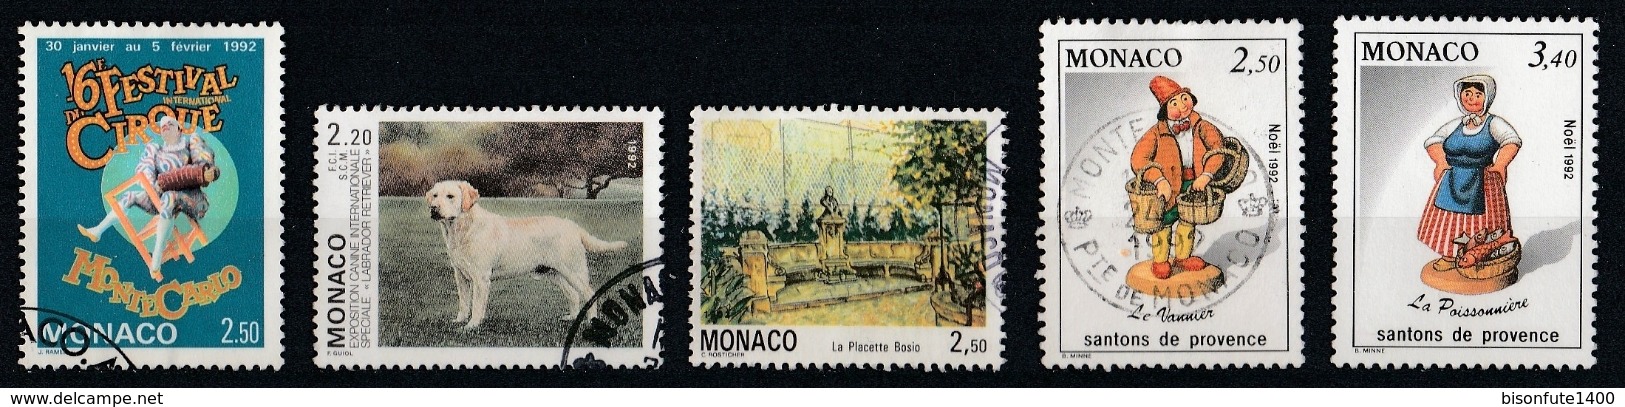 Monaco 1992 : Timbres Yvert & Tellier N° 1810 - 1813 - 1833 - 1846 Et 1847. - Usados